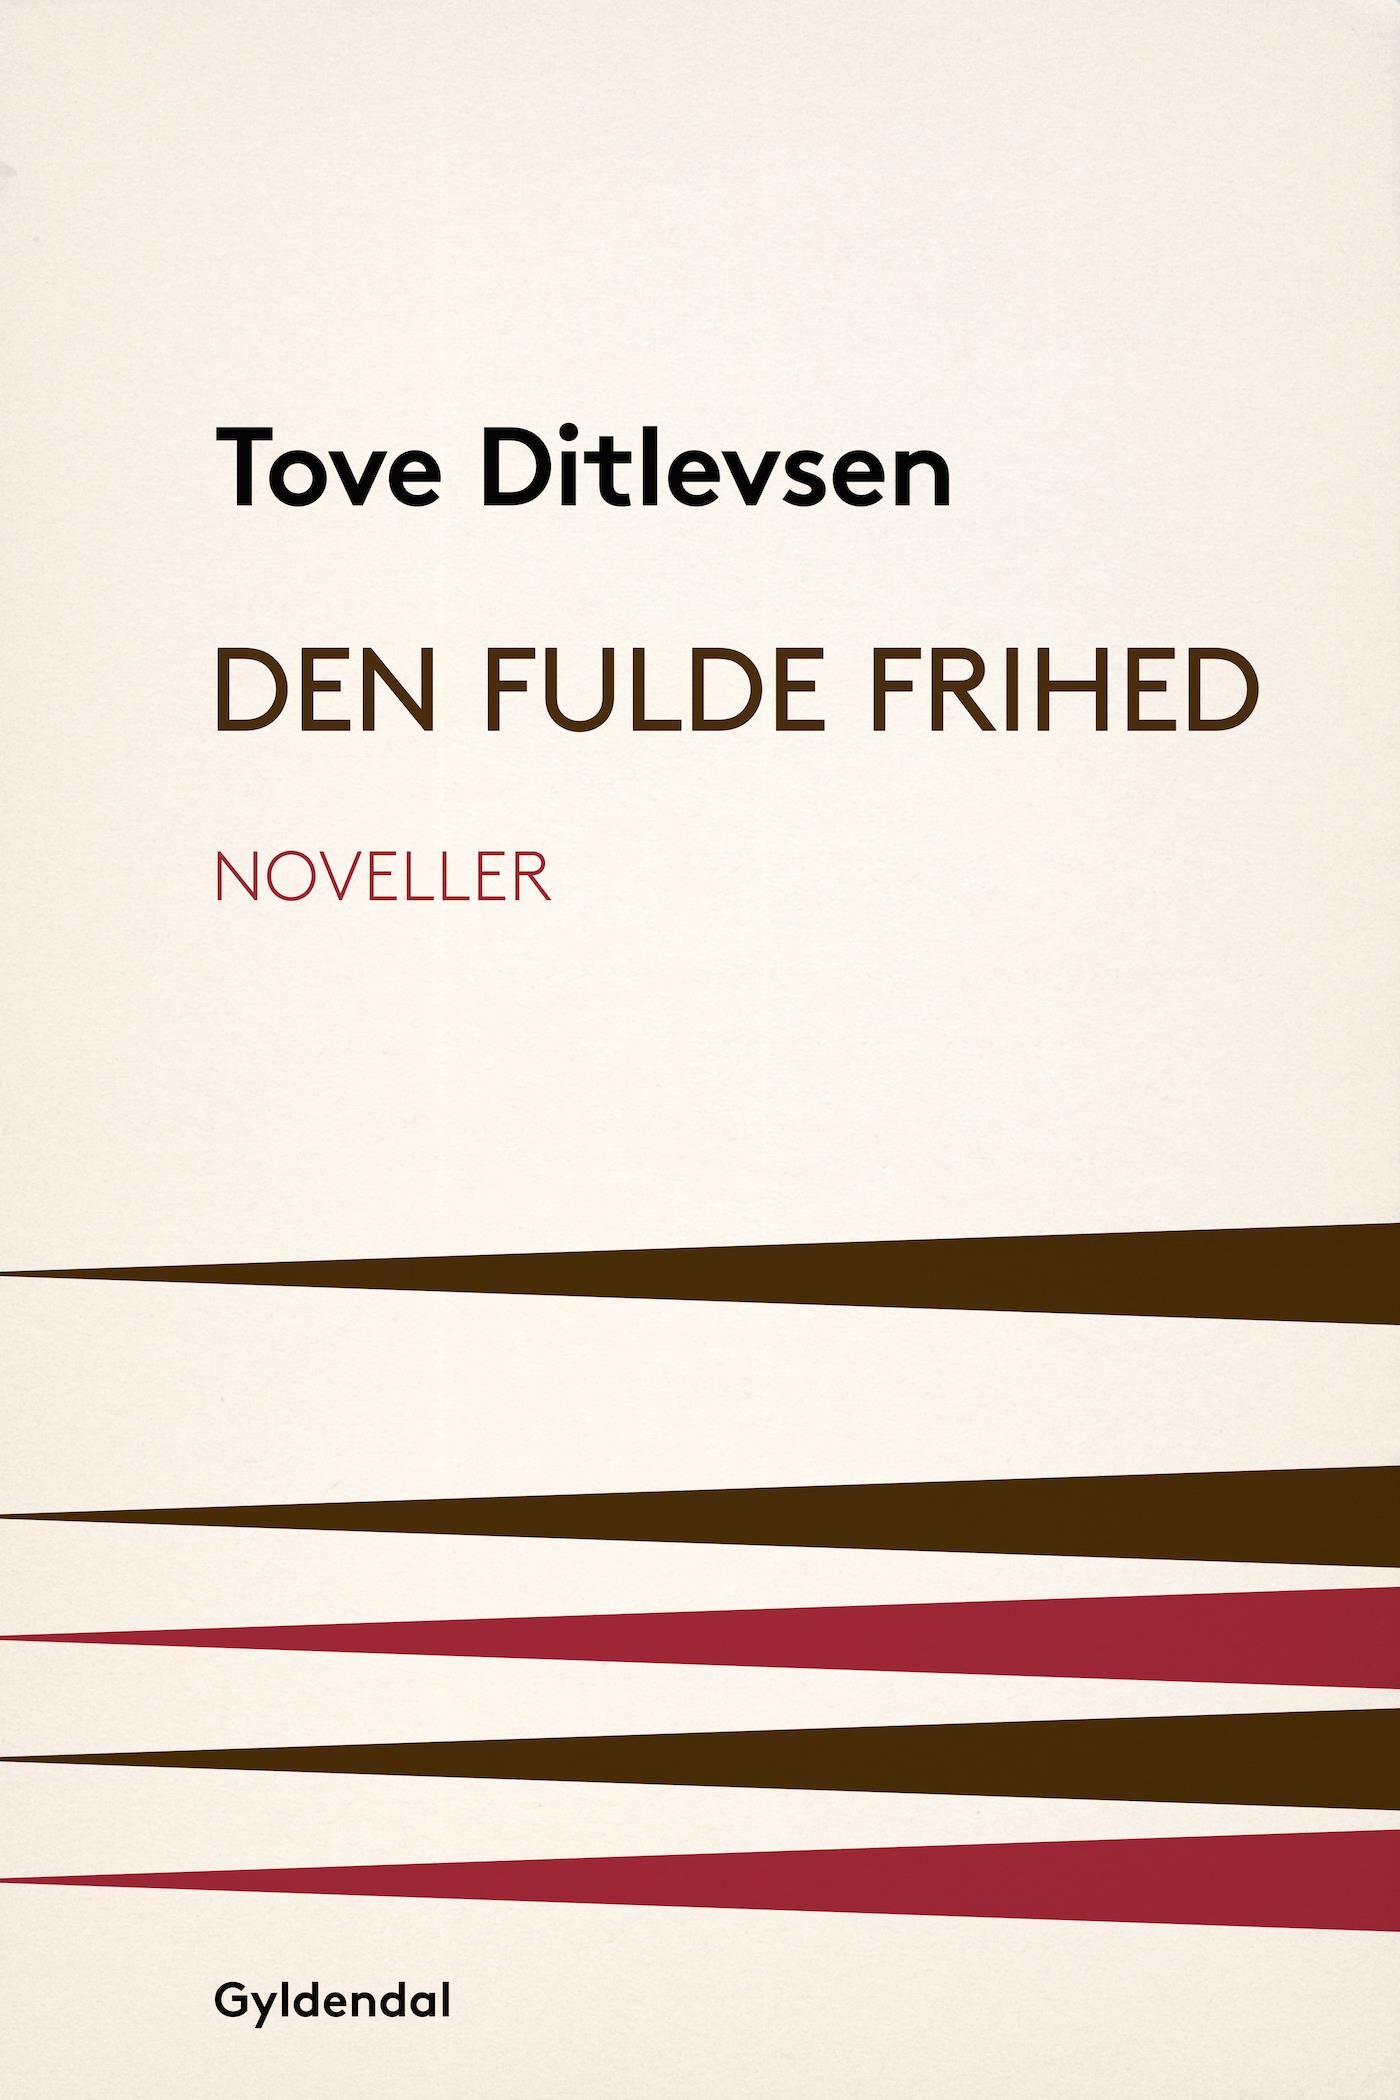 Den fulde frihed, e-bok av Tove Ditlevsen